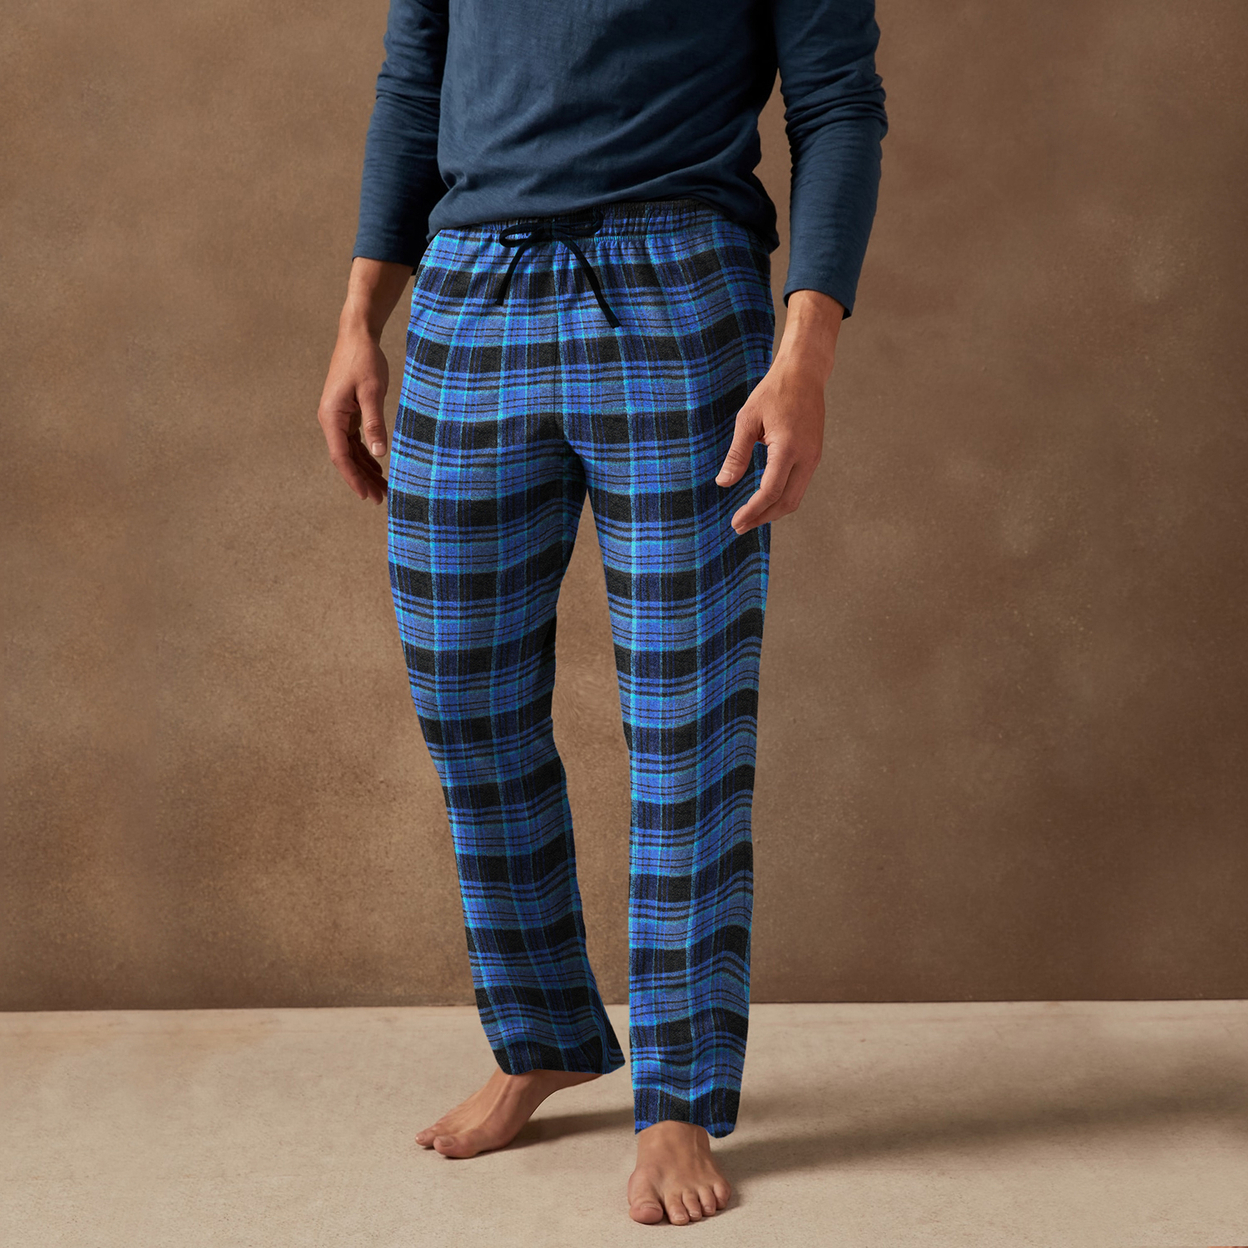 Men's Ultra-Soft Cozy Flannel Fleece Plaid Pajama Sleep Bottom Lounge Pants - Red, Small